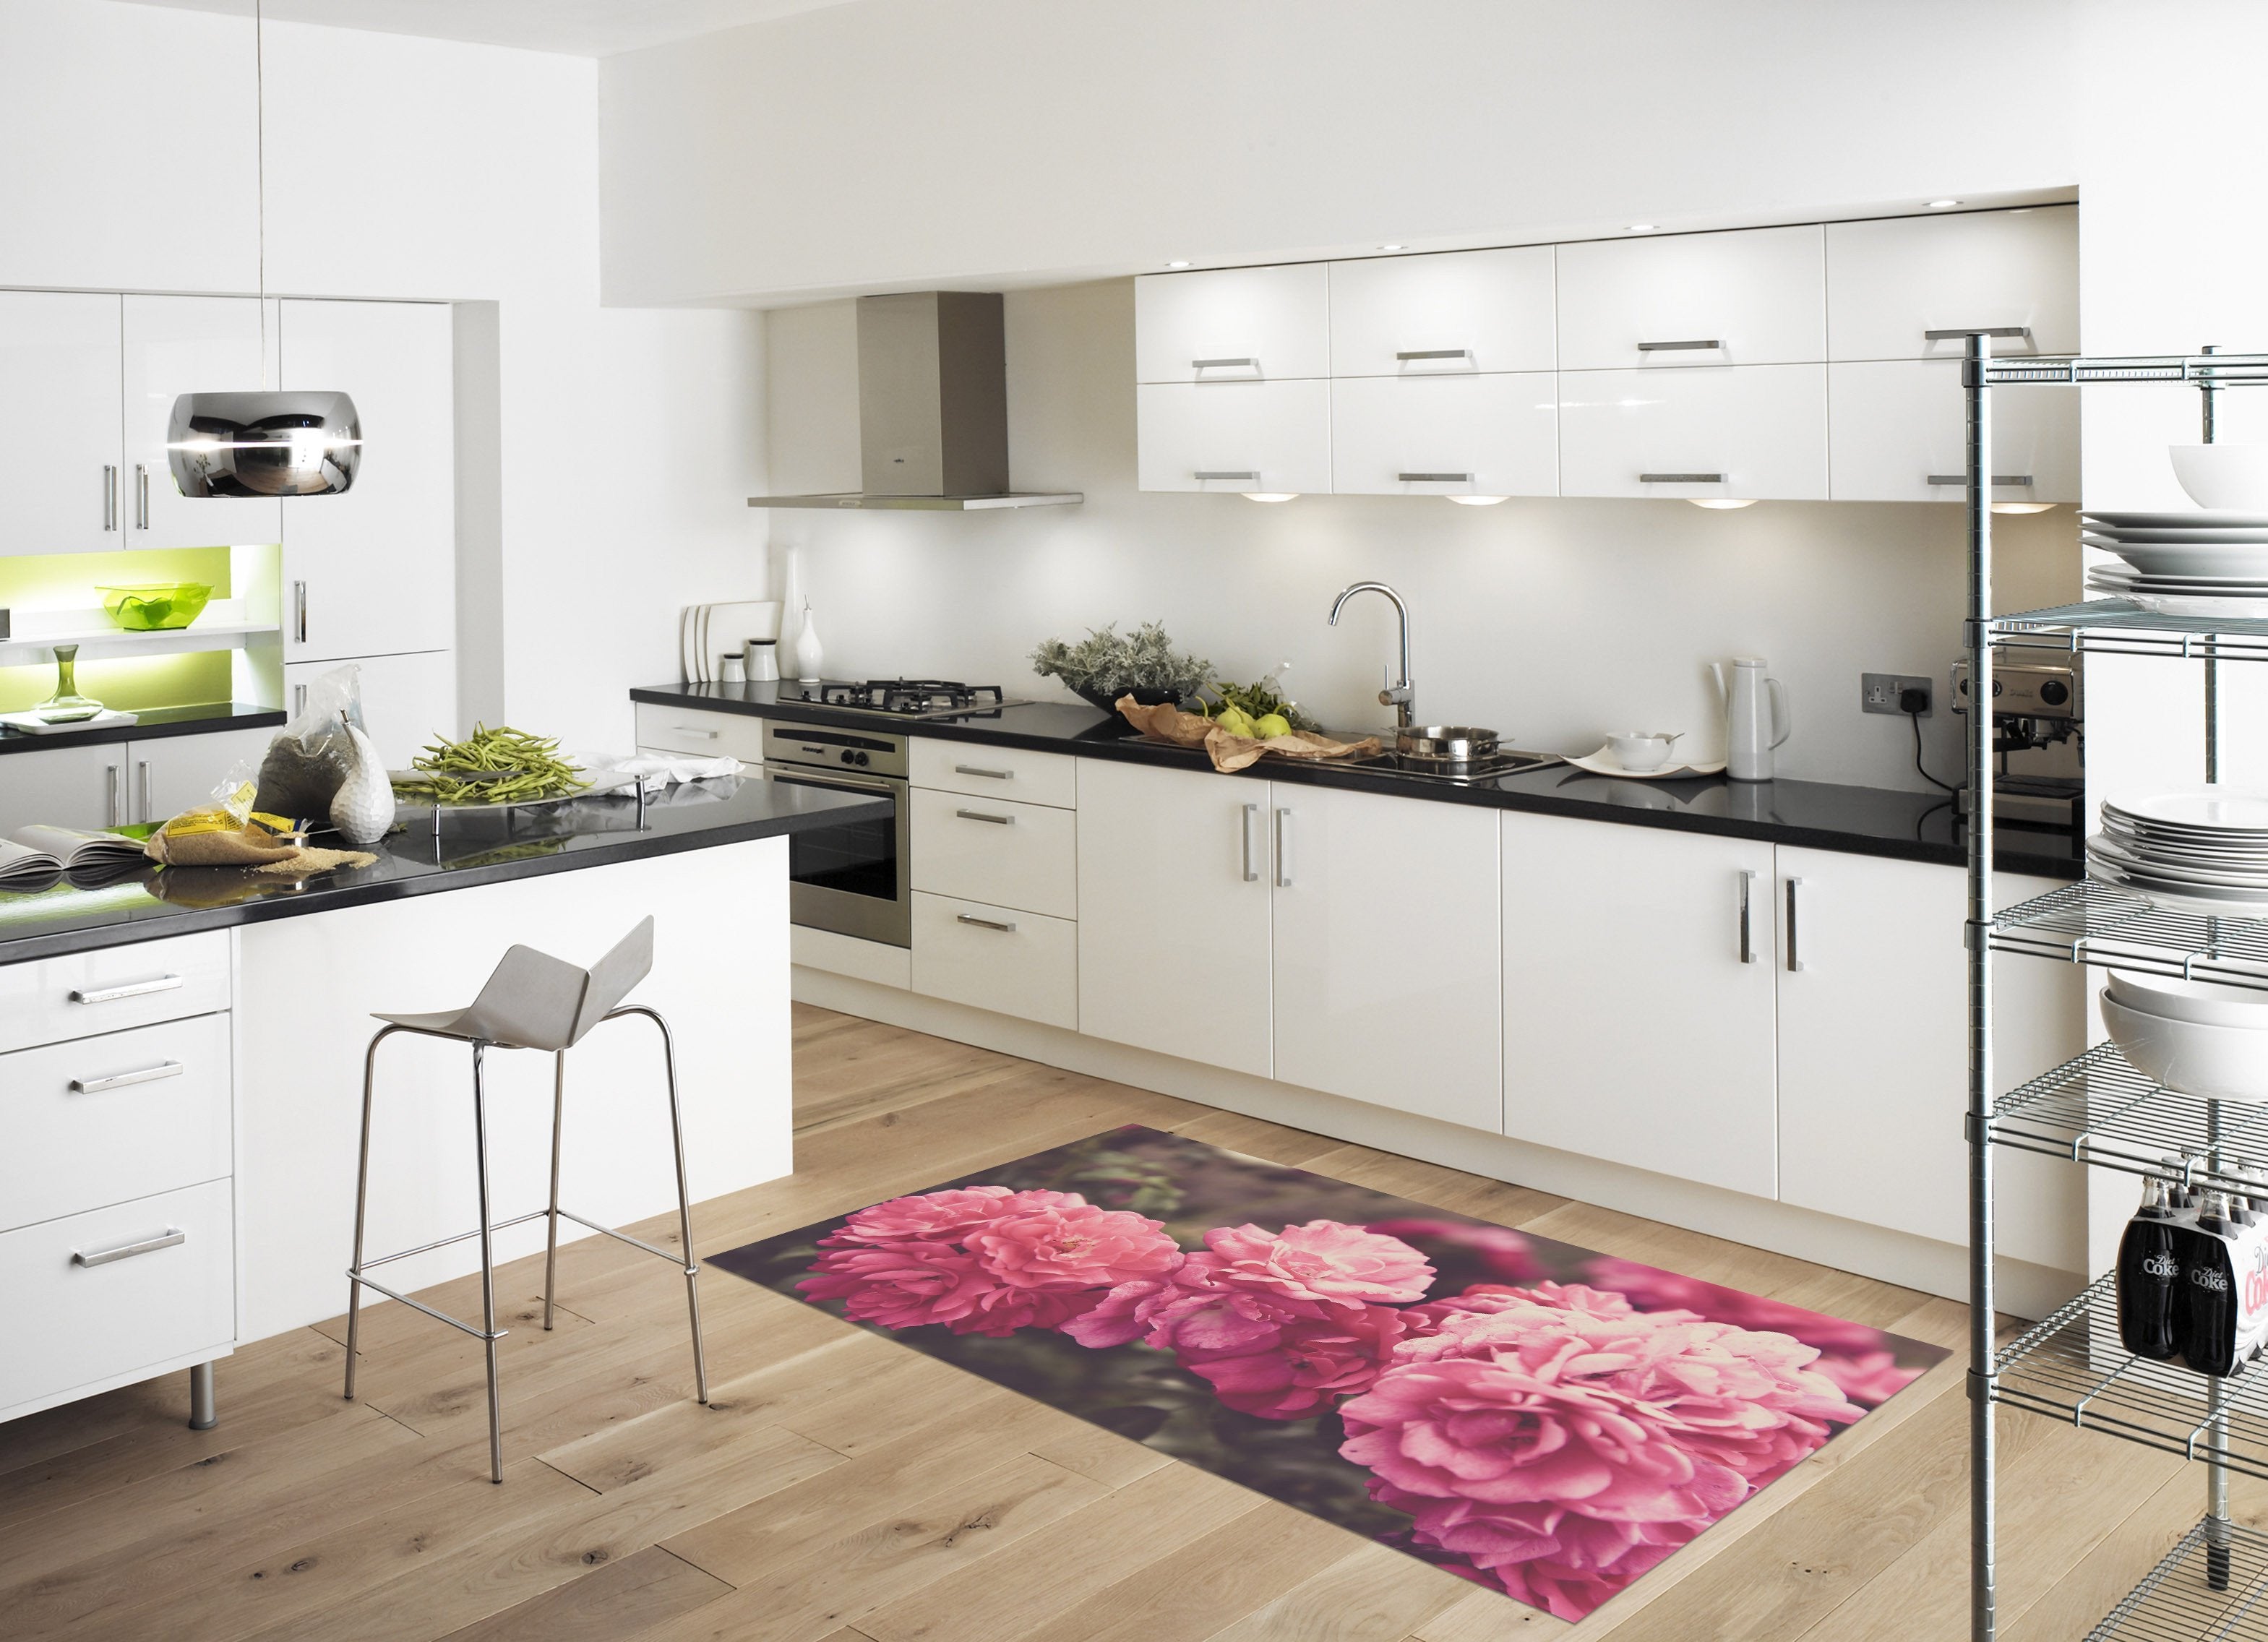 3D Flowers Cluster 510 Kitchen Mat Floor Mural Wallpaper AJ Wallpaper 